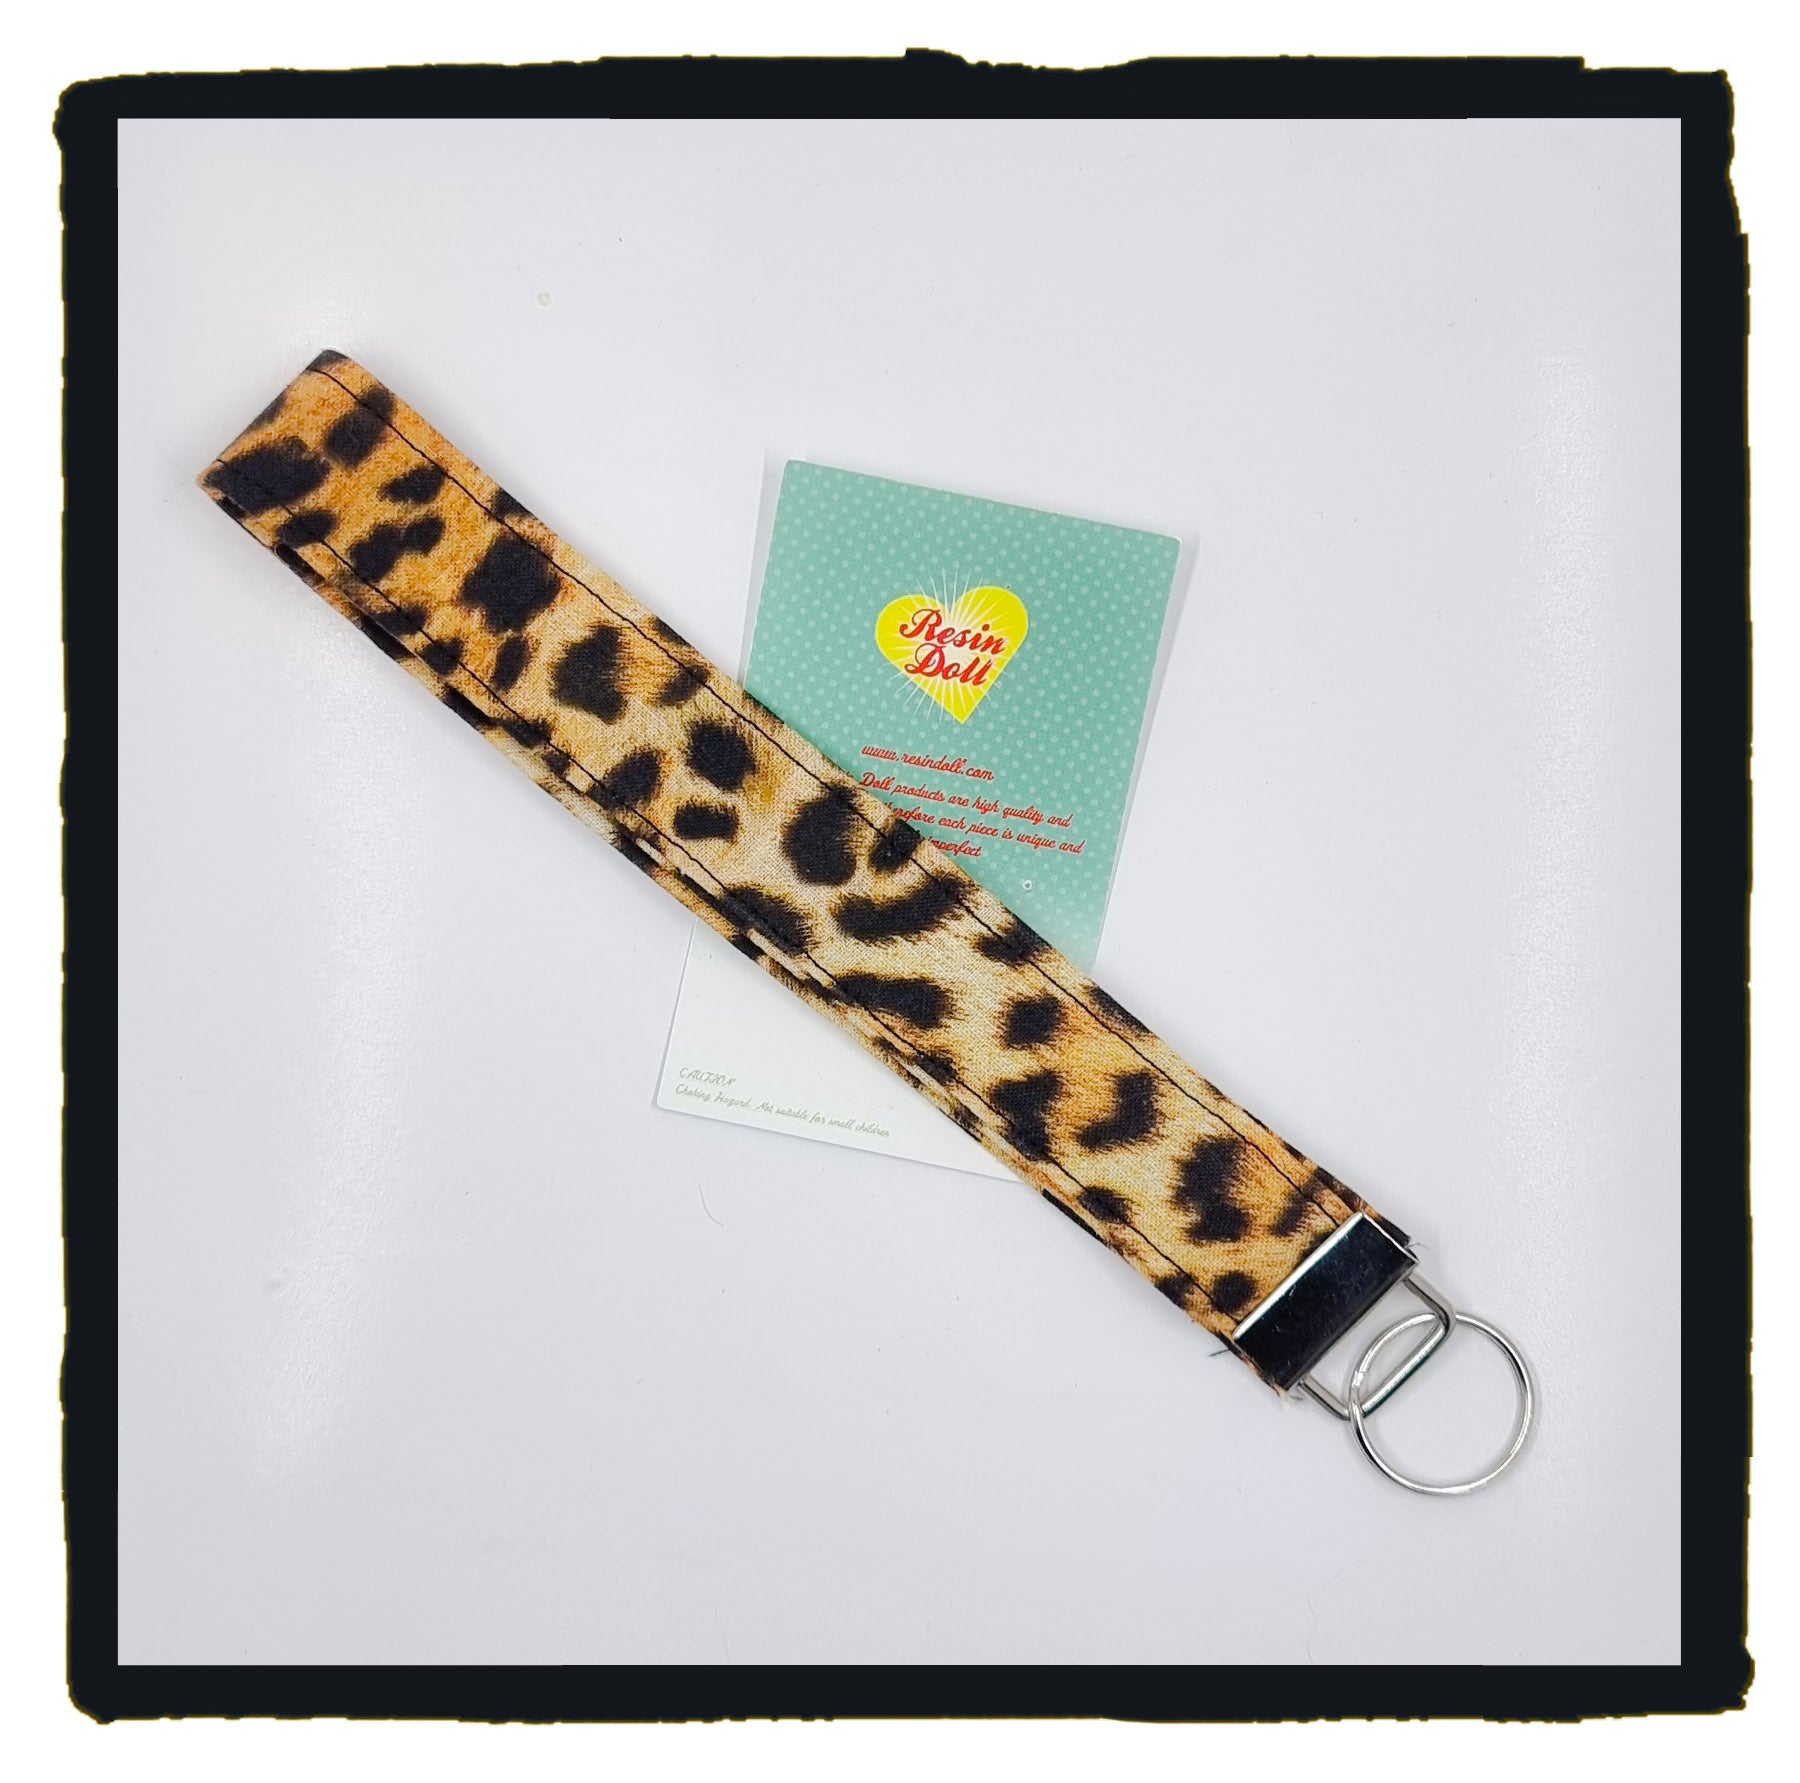 Leopard Wristlet key Fob